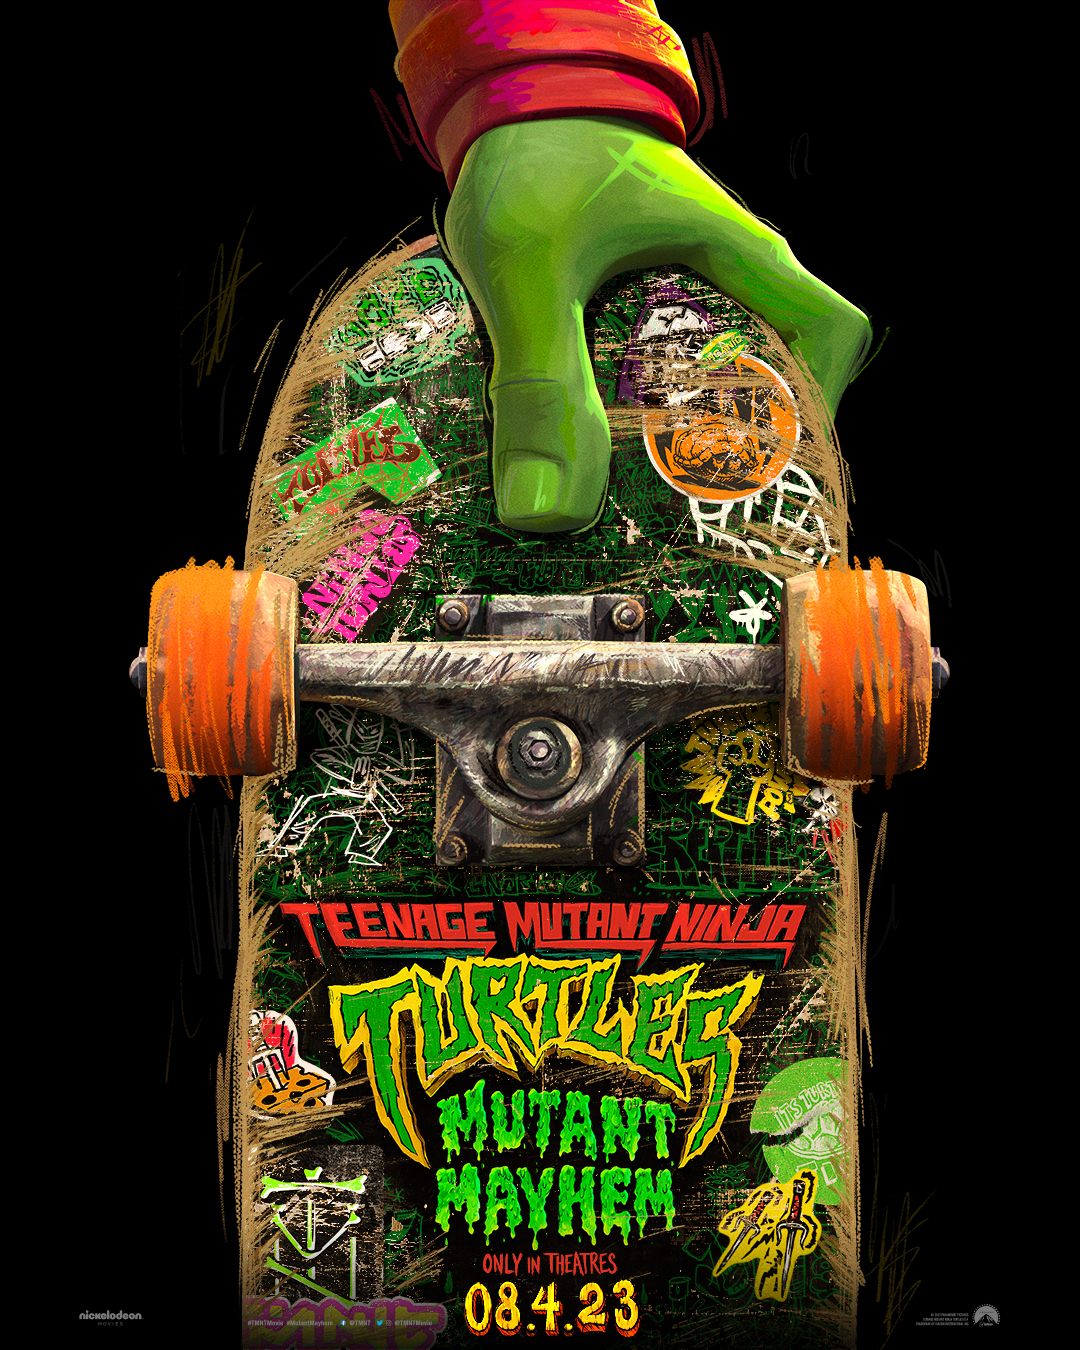 Teenage Mutant Ninja Turtles: Mutant Mayhem trailer exudes quality animated action